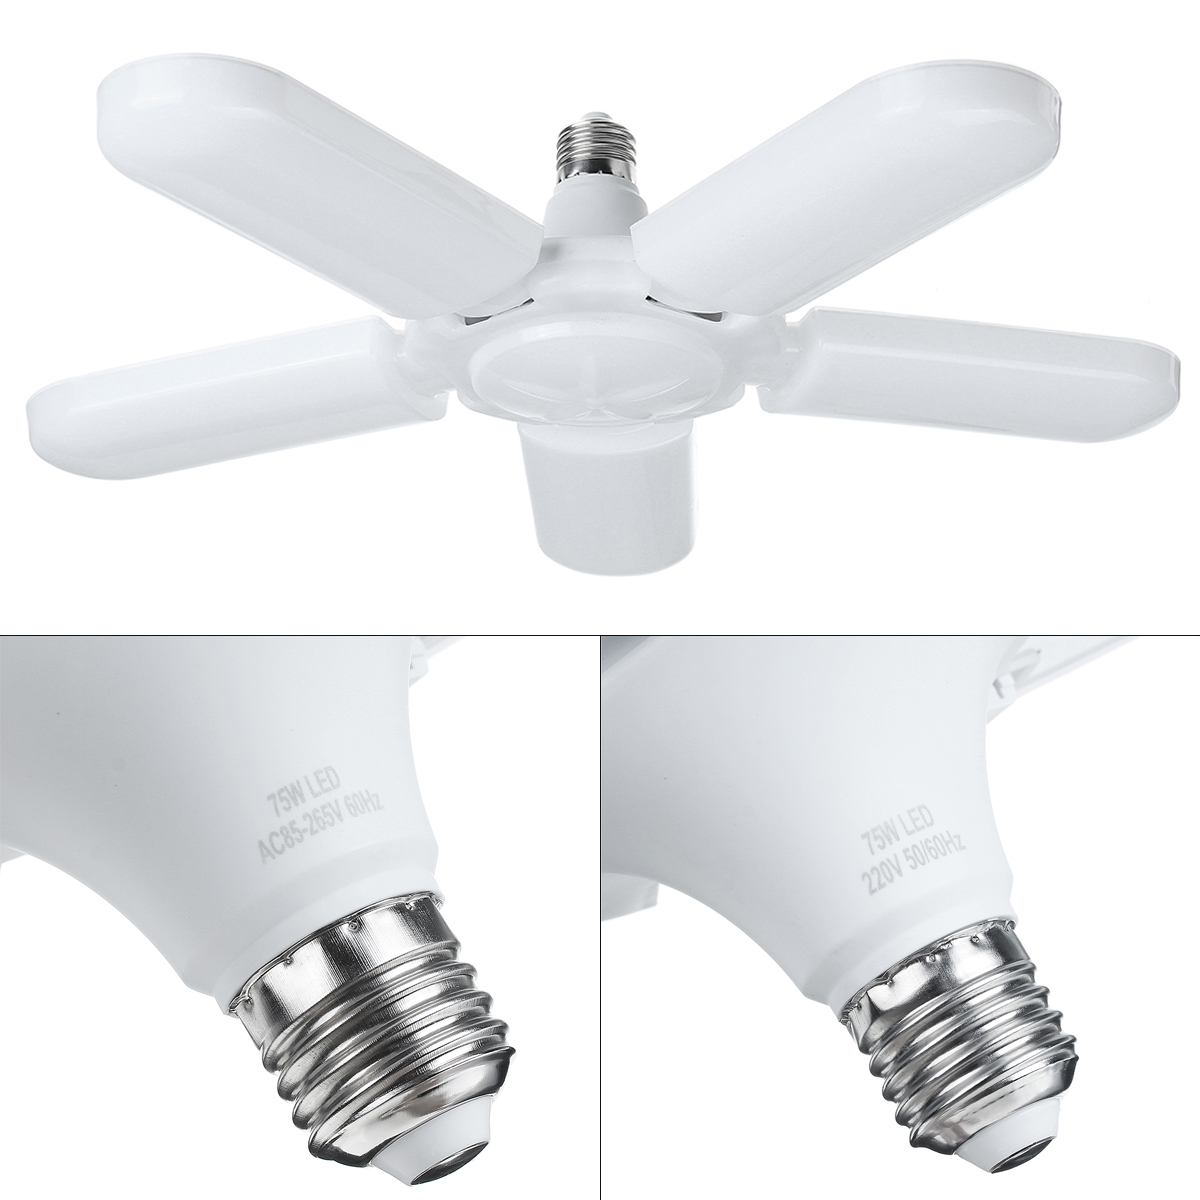 135pcs-75W-E27-LED-Light-Bulb-Deformable-Ceiling-Garage-Lamp-Fixture-for-Workshop-Home-AC85-265V-AC1-1645598-2